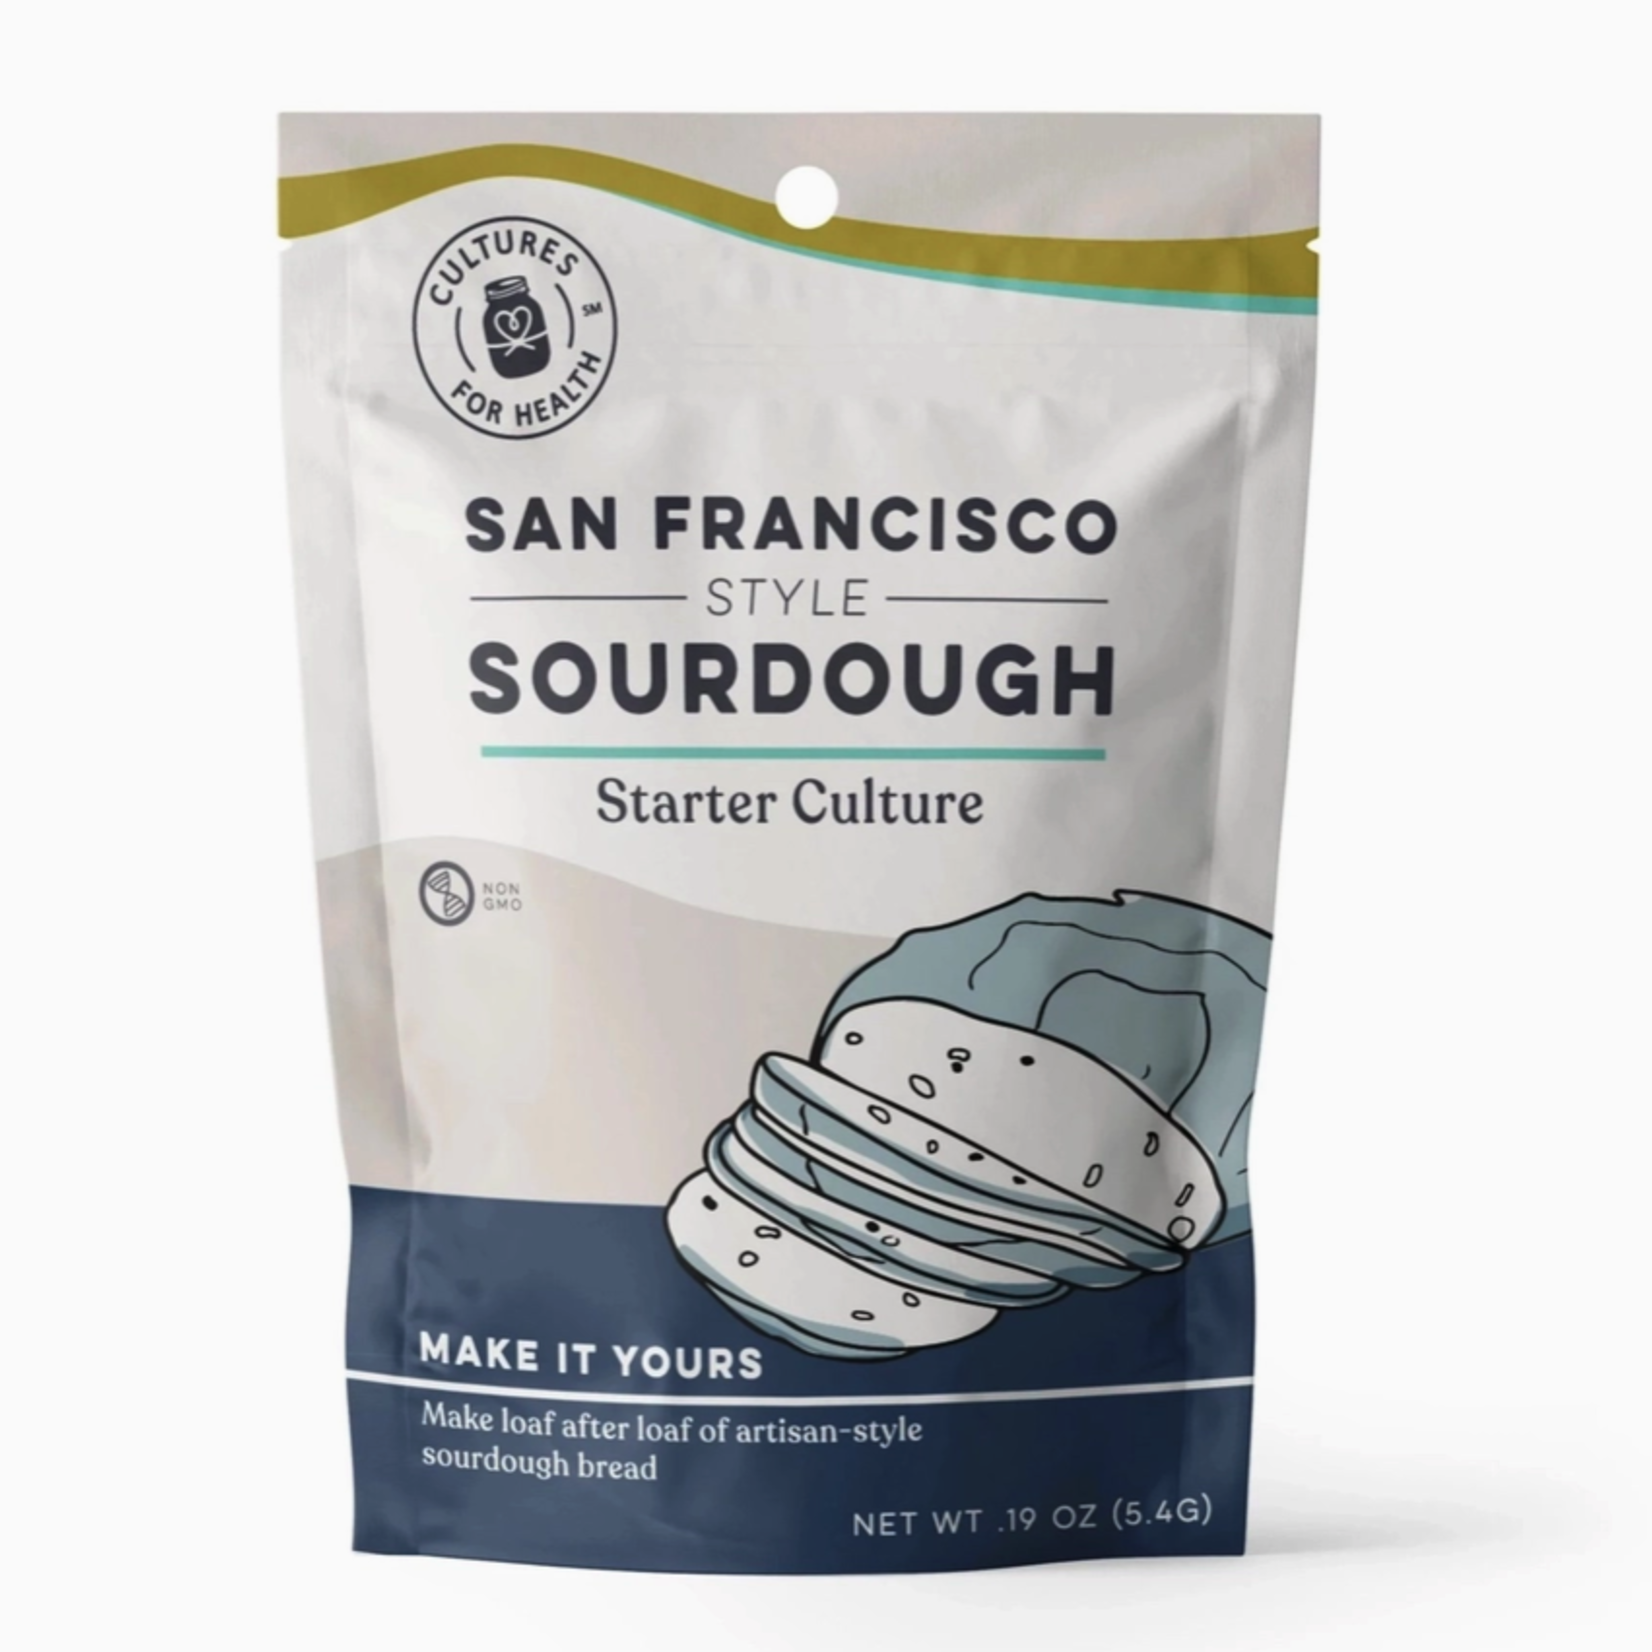 Cultures For Health Sourdough Starter - San Francisco Style